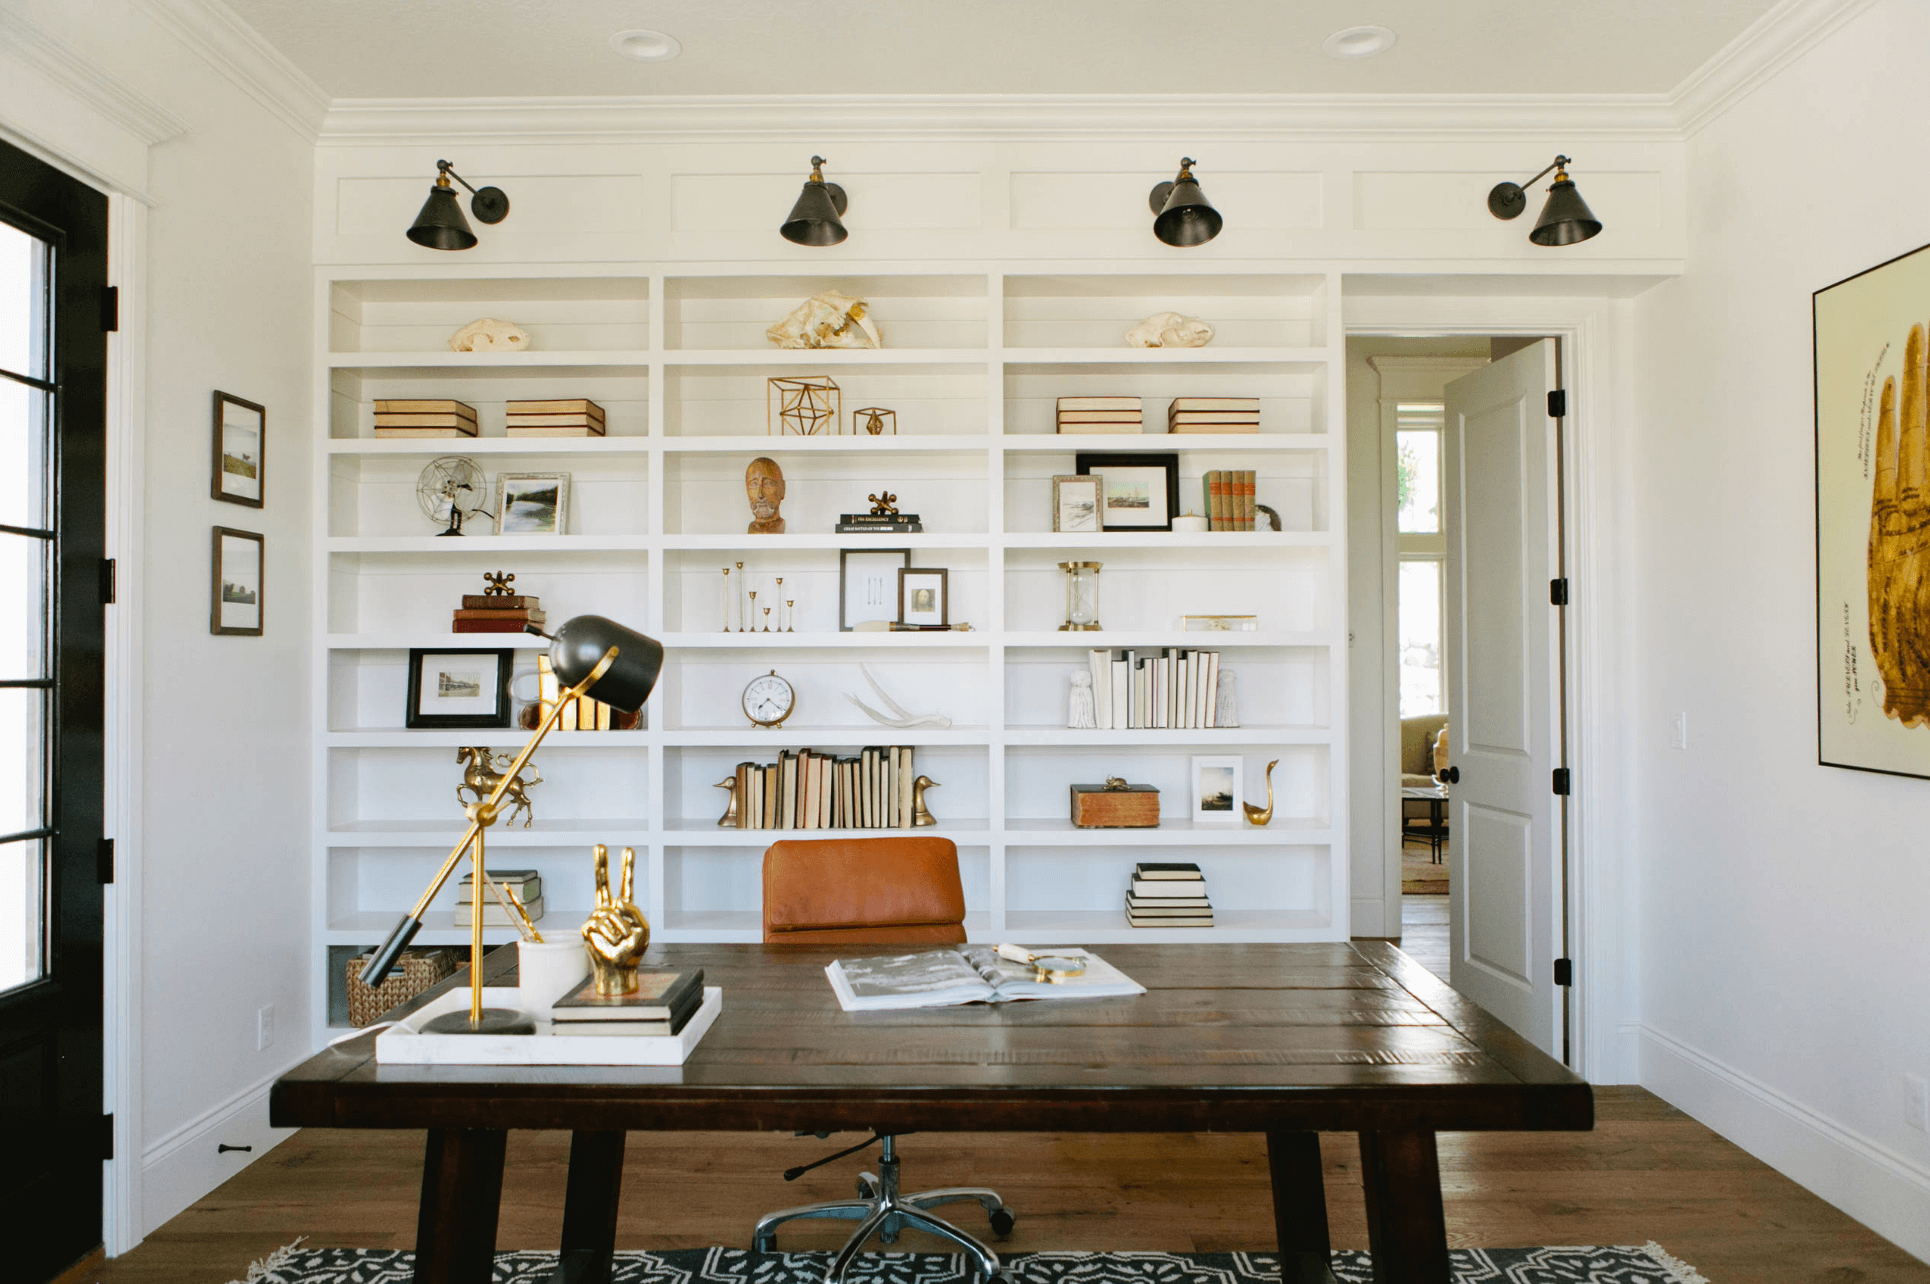 4 Modern Ideas for Your Home Office Décor